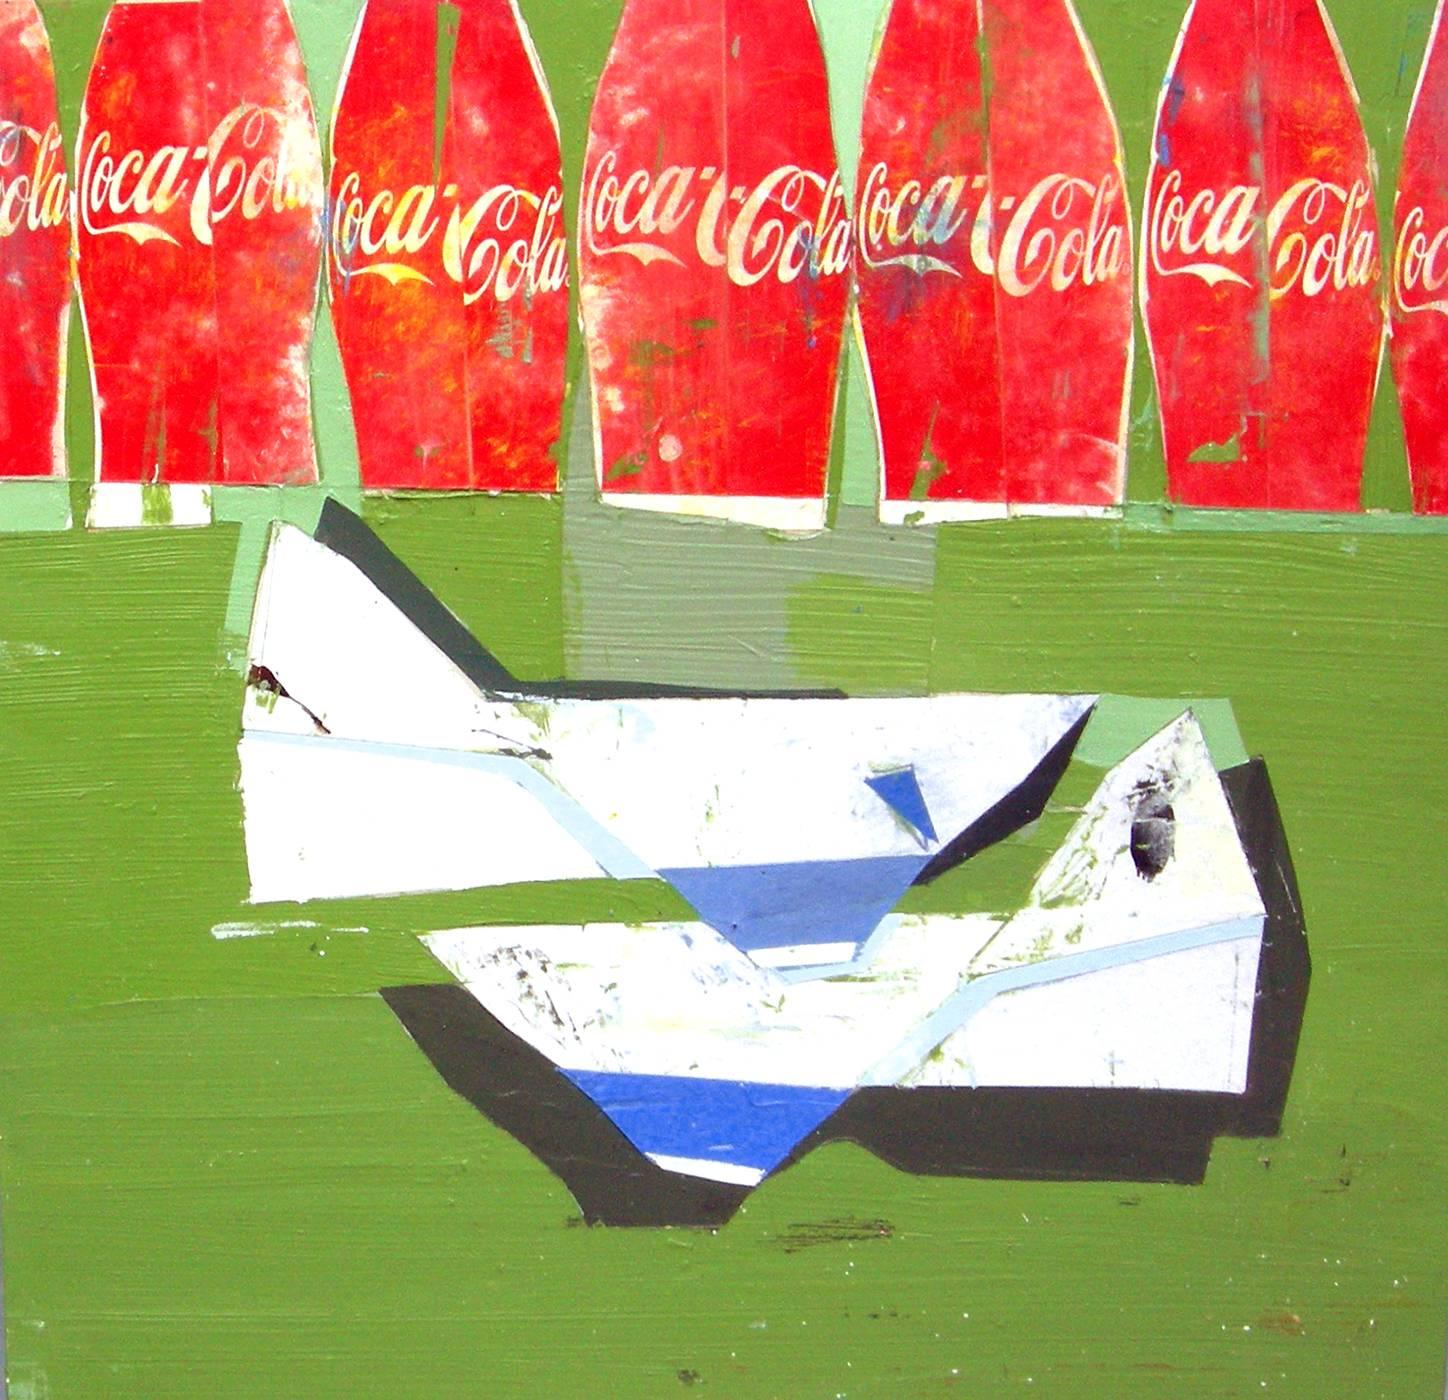 Quand We Were Children/Coke Work - Peinture de Coca-Cola